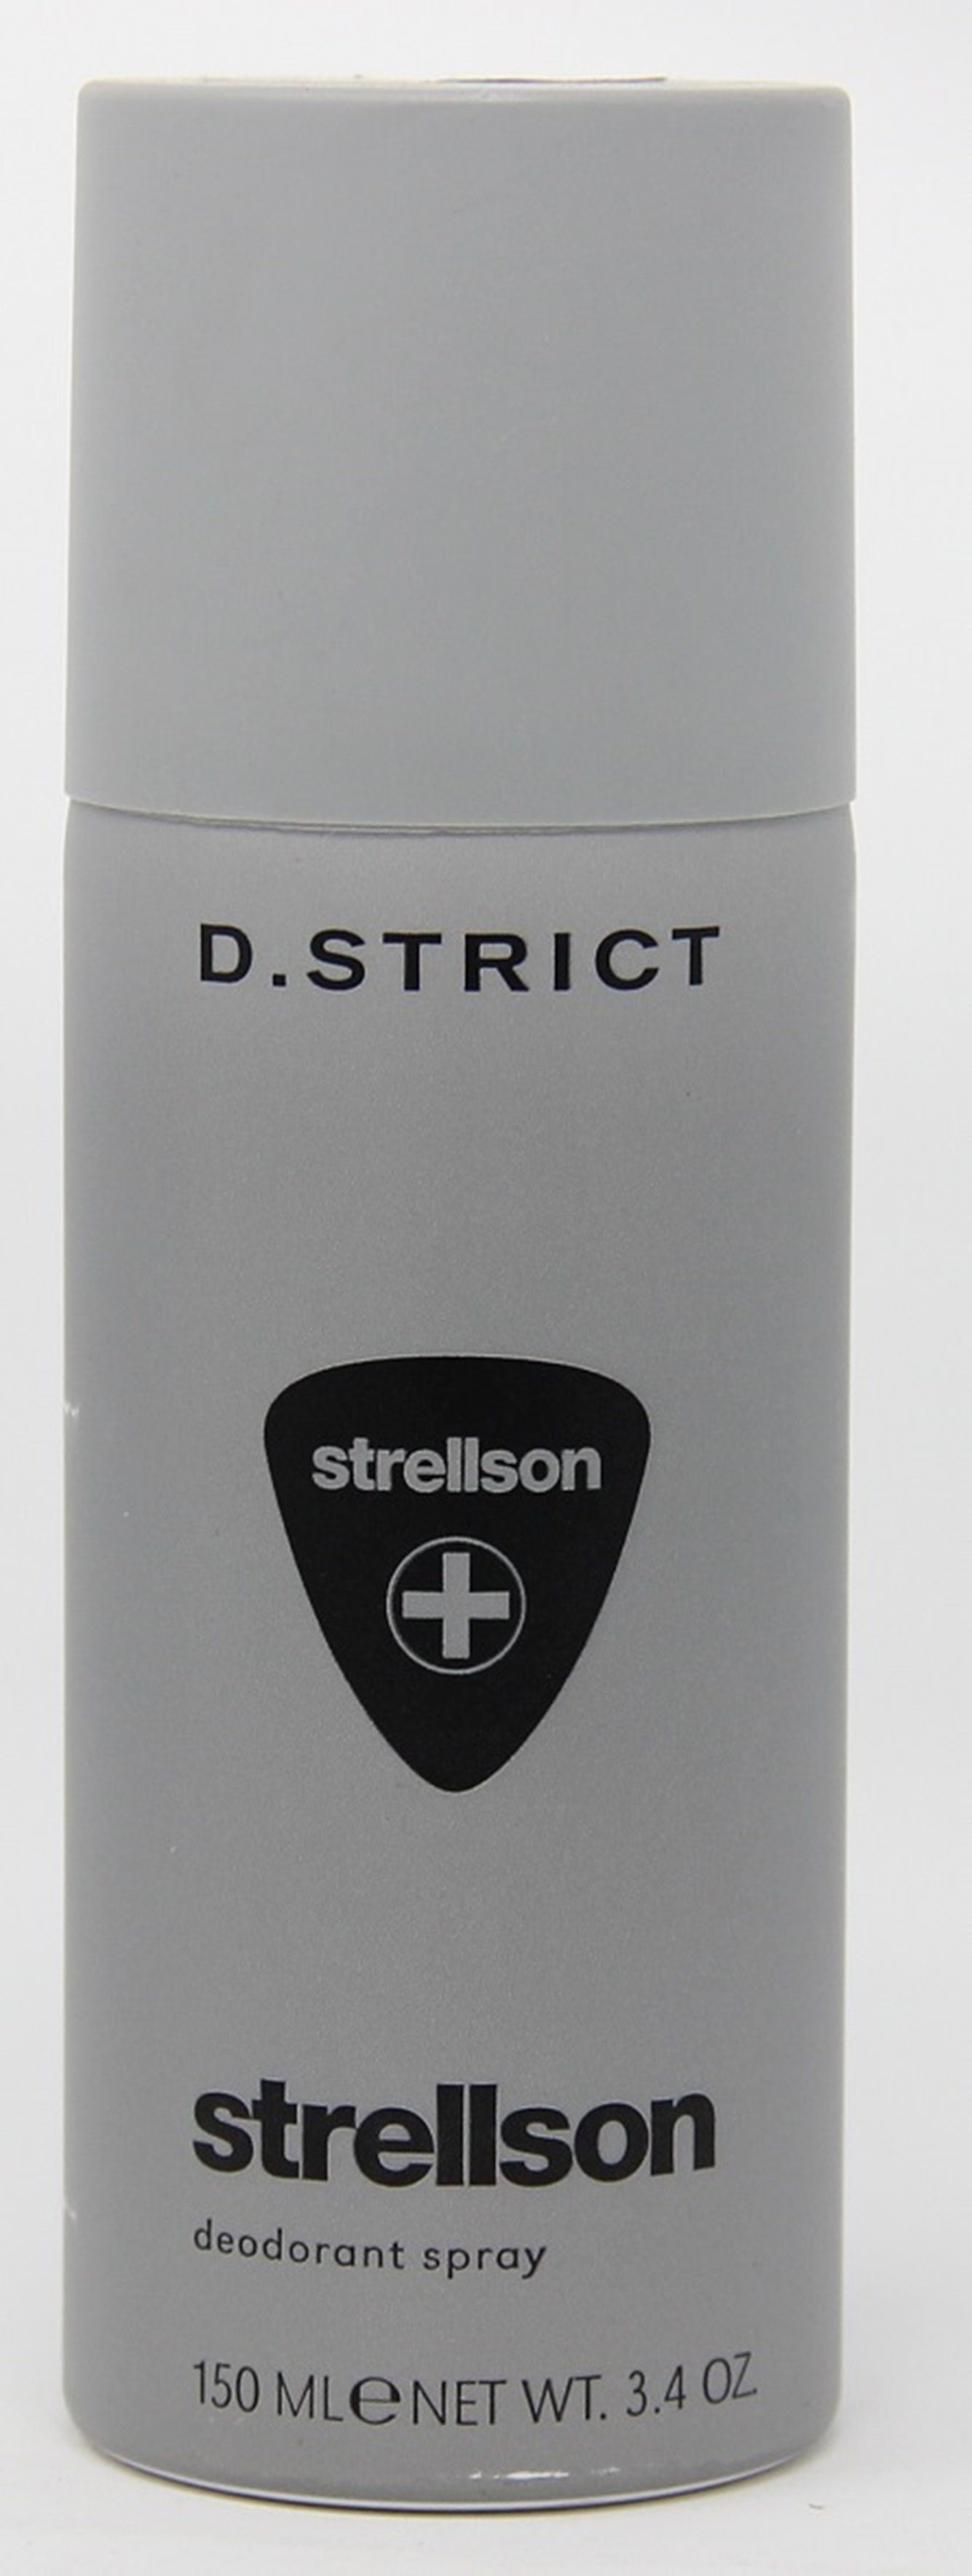 Strellson Deo-Spray Deodorant Strellson Spray D.Strict 150ml